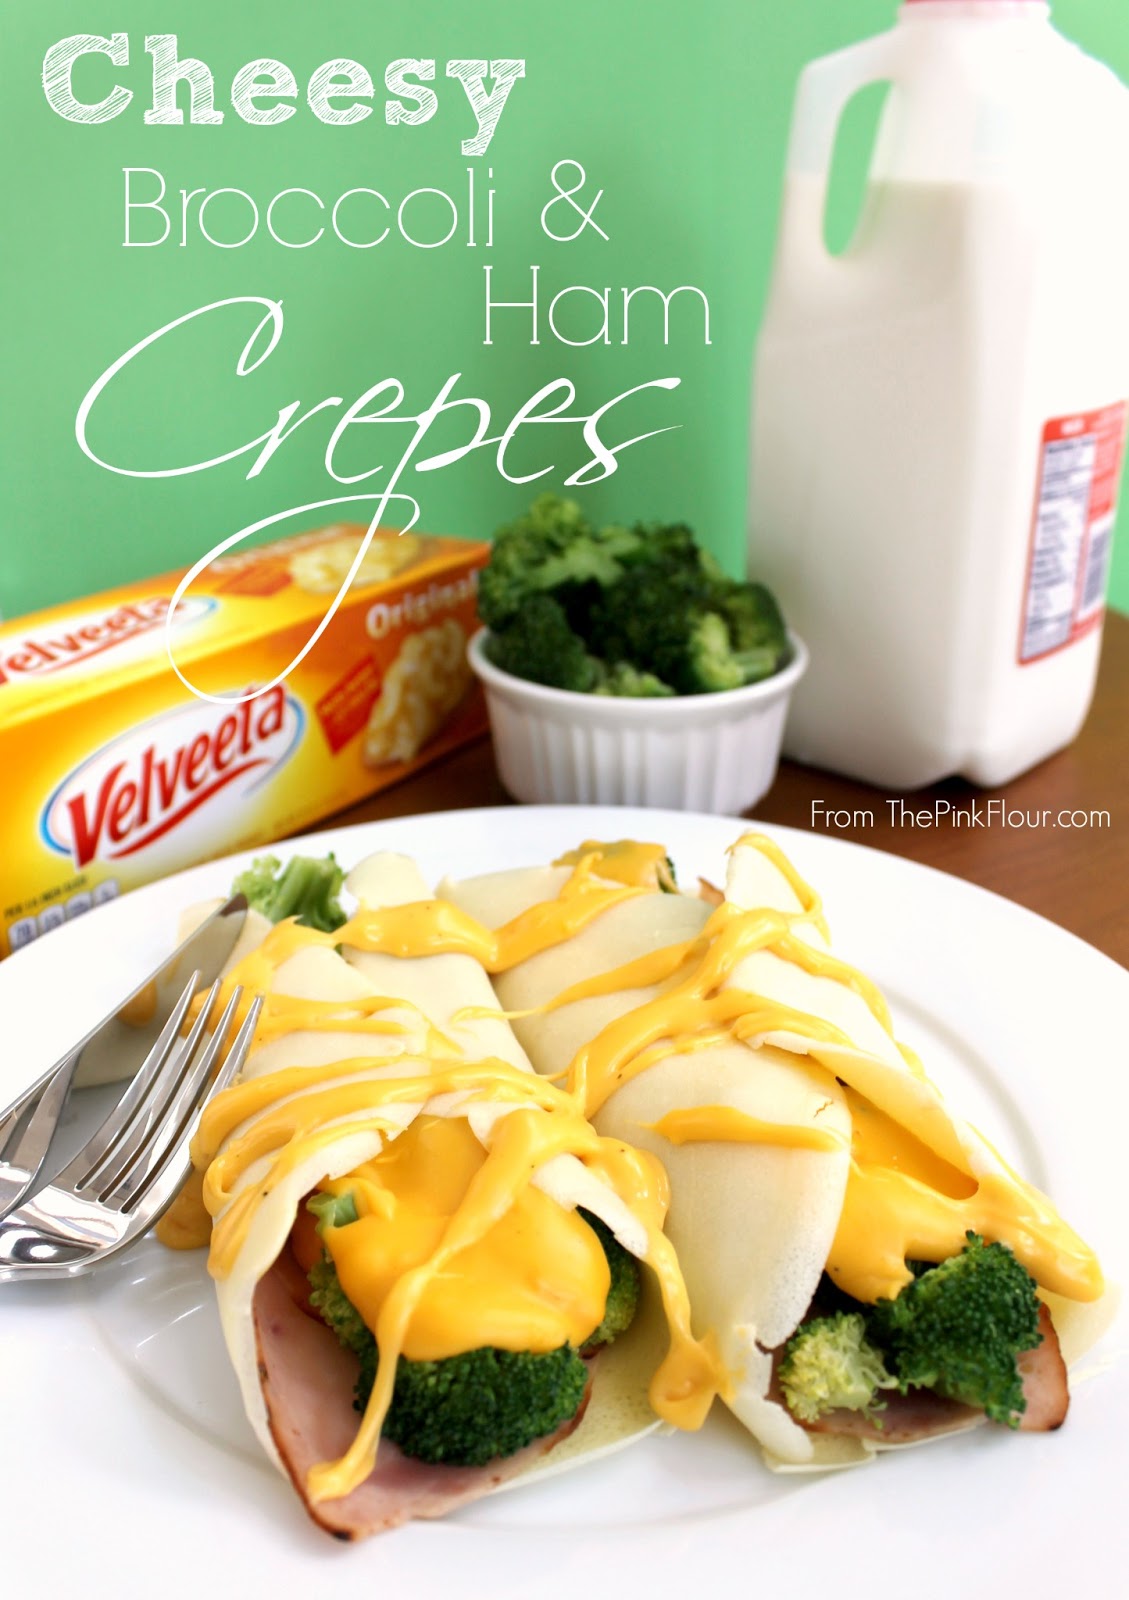 Cheesy Broccoli & Ham Crepes - easy recipe for crepes filled with ham, brocoli & velveeta cheese from www.thepinkflour.com #VelveetaRecipes